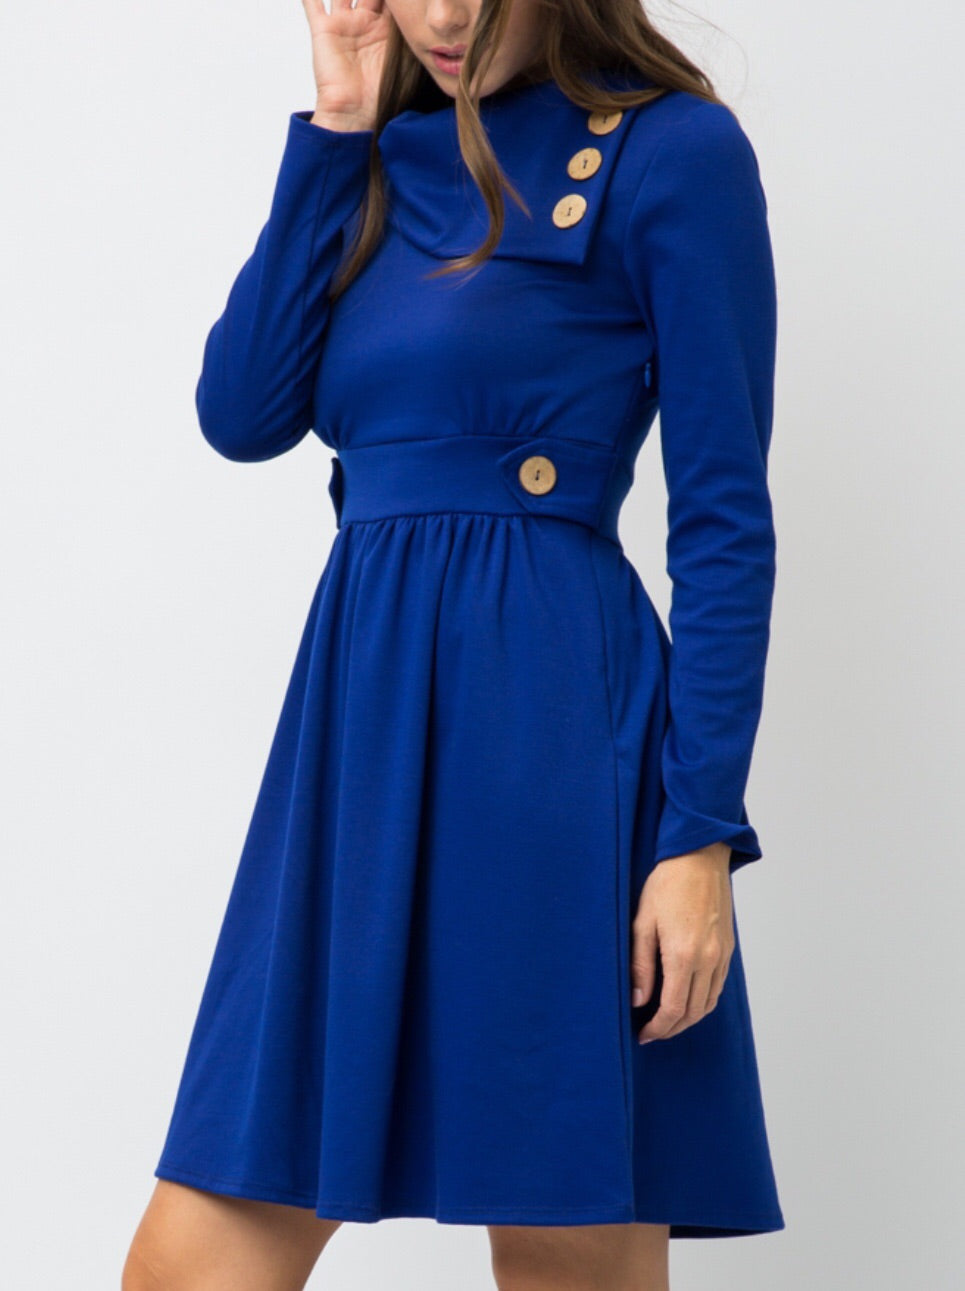 Blue royal dress